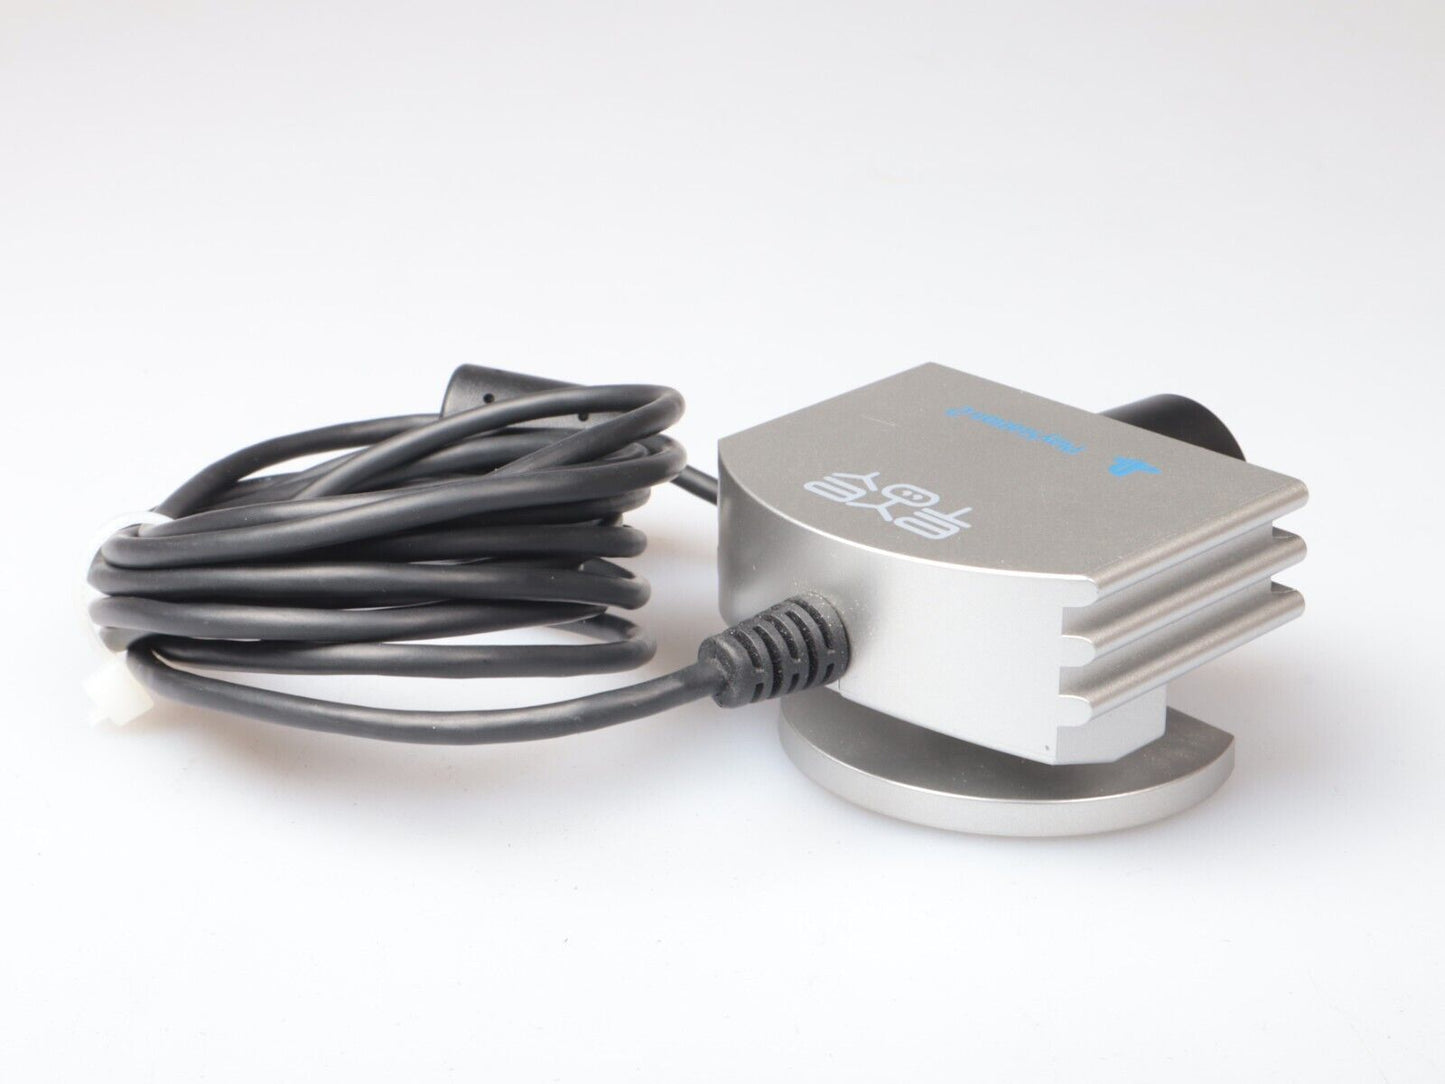 Playstation 2 | Silver EyeToy USB Camera